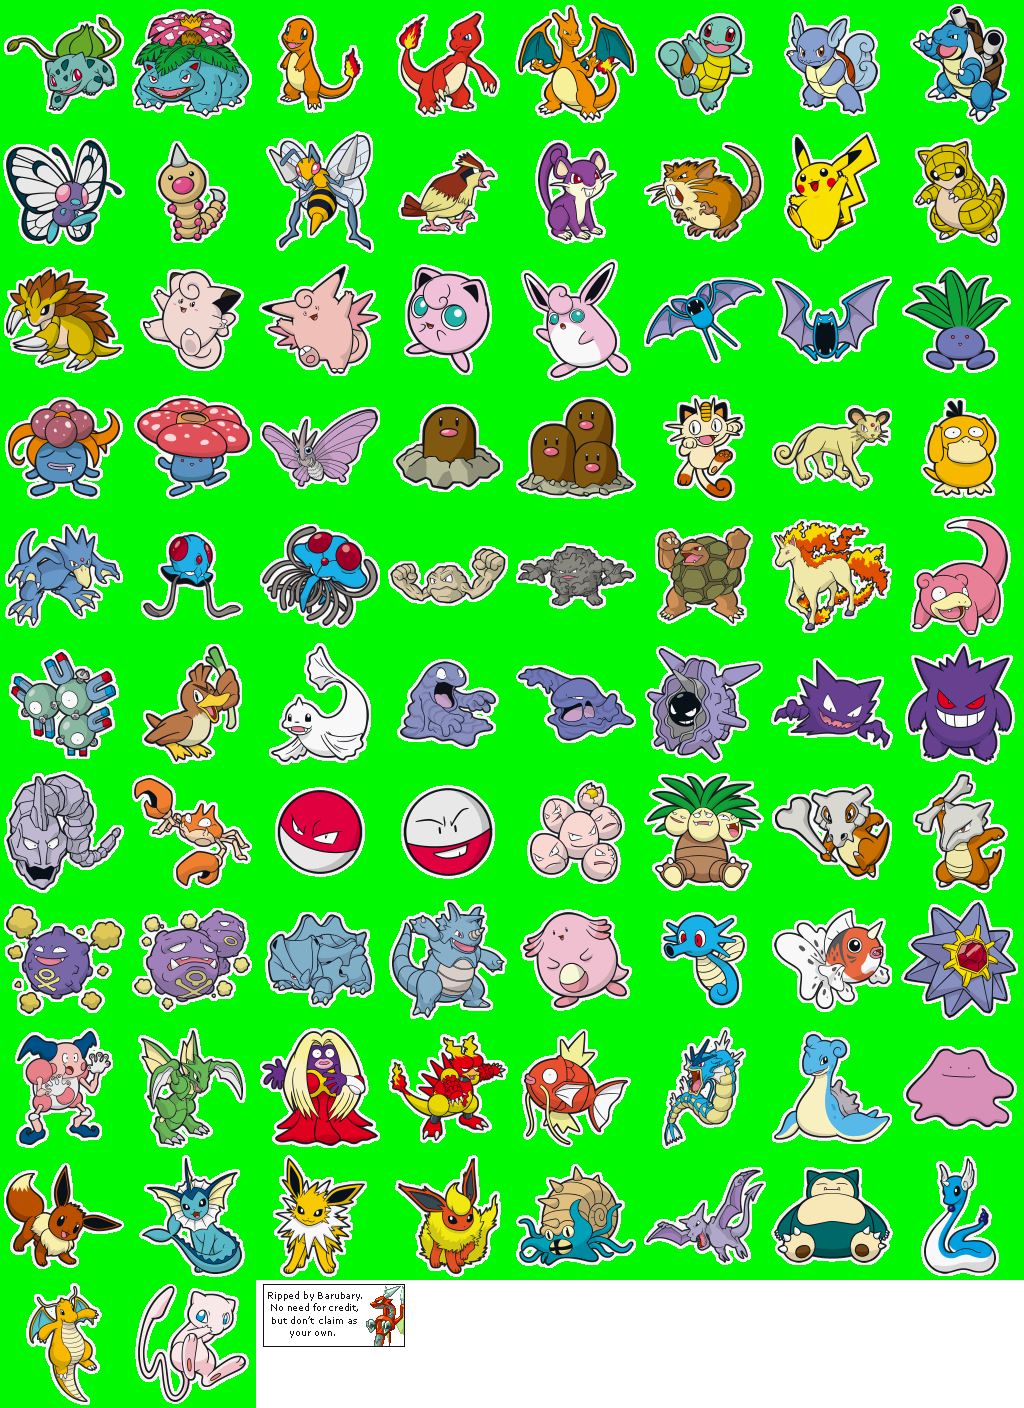 Learn with Pokémon: Typing Adventure - Pokémon Stickers (1st Generation)